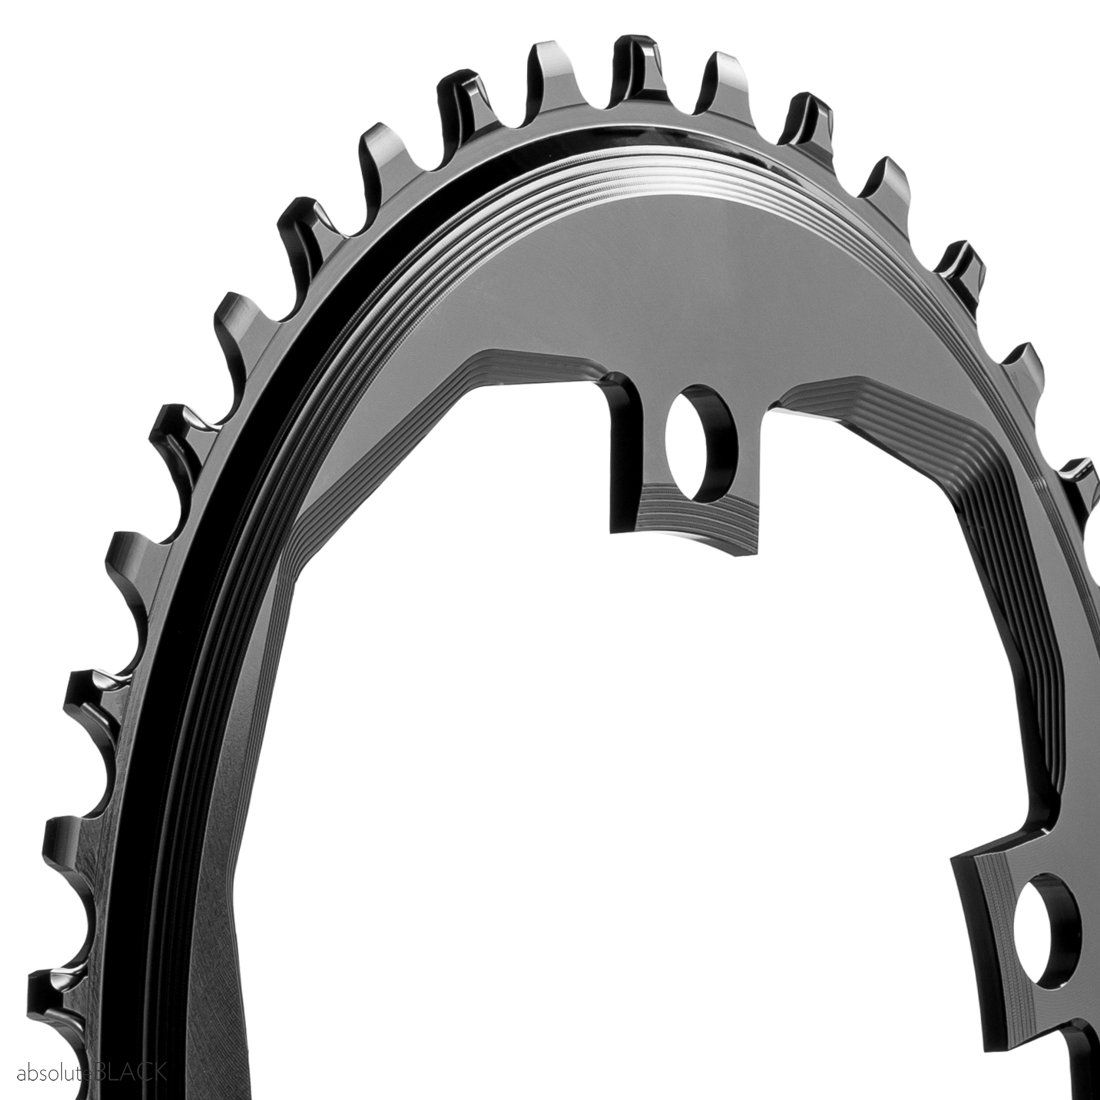 Oval chainring for SRAM Apex 1 cranks